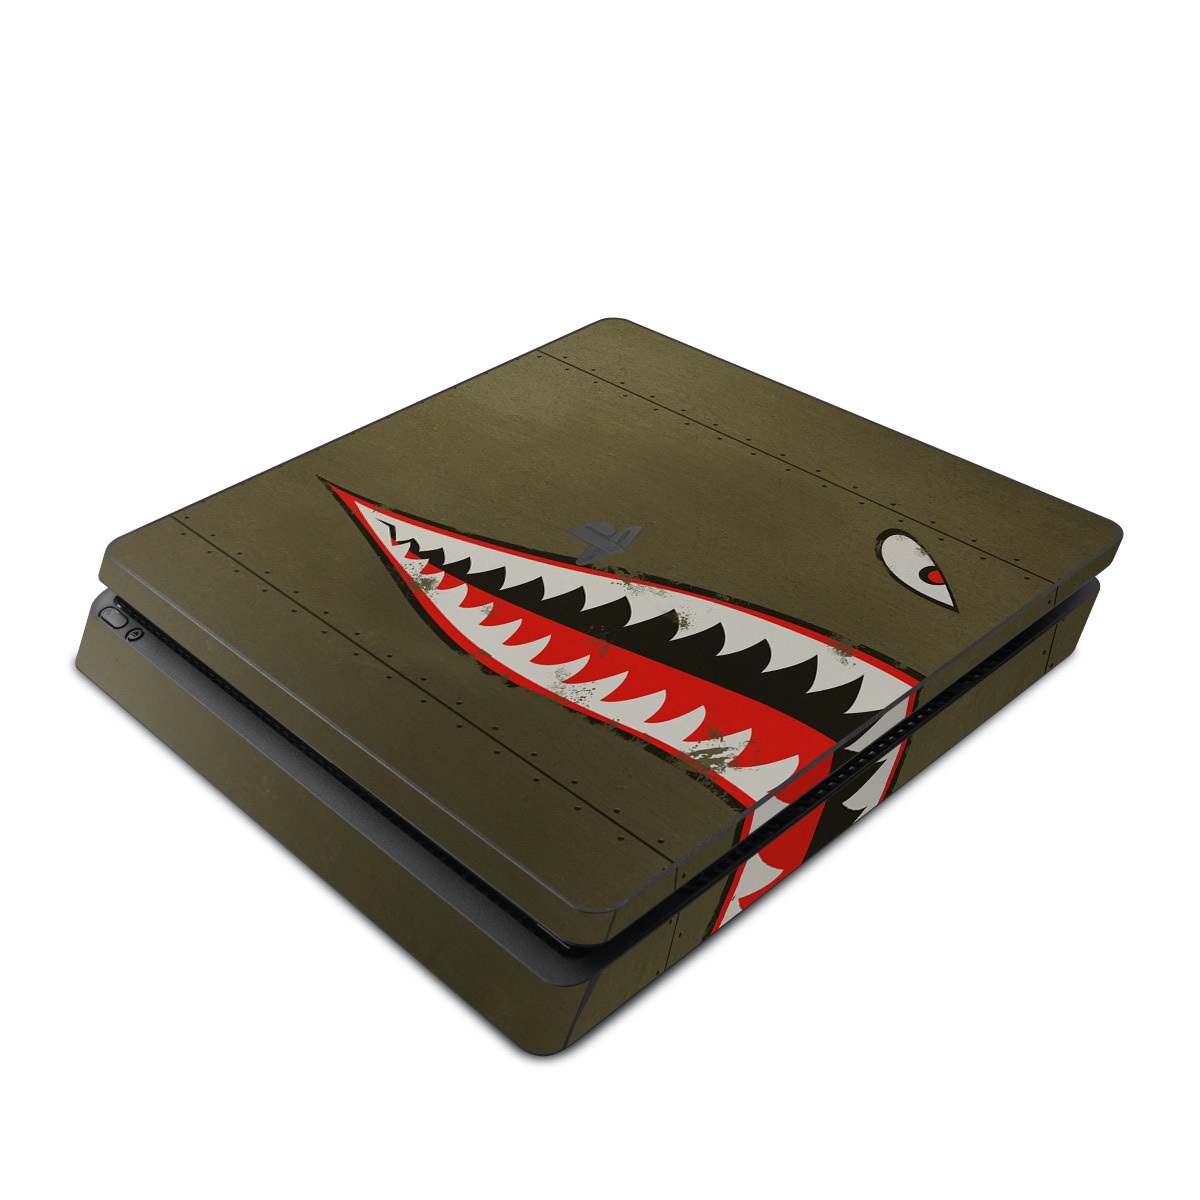 Sony PS4 Slim Skin - USAF Shark (Image 1)